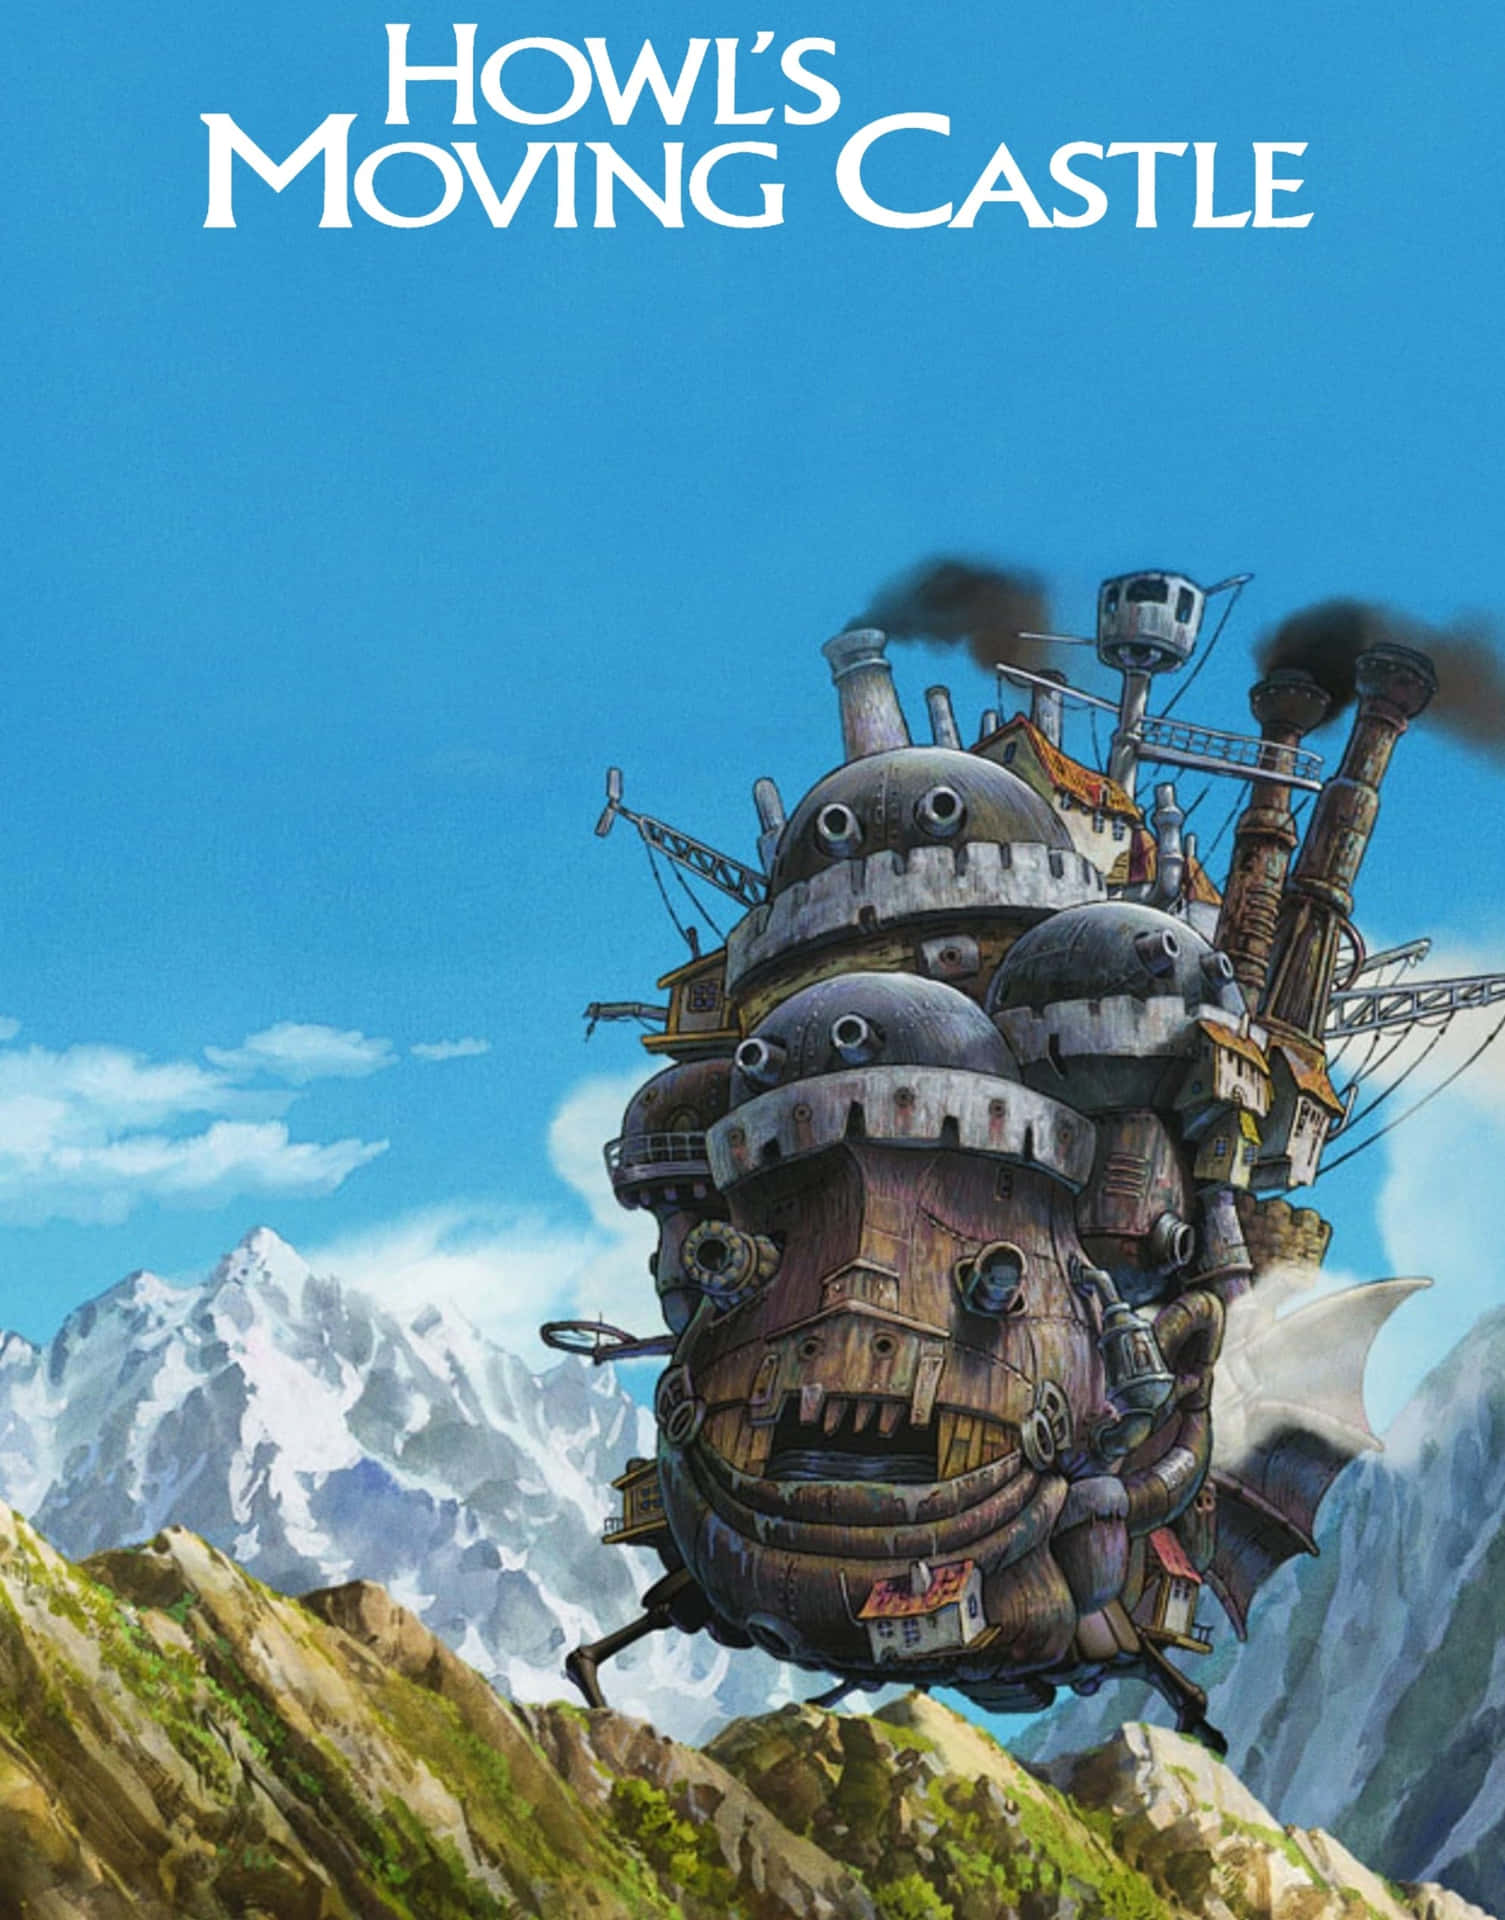 Howl's Moving Castle — a Walt Disney classic